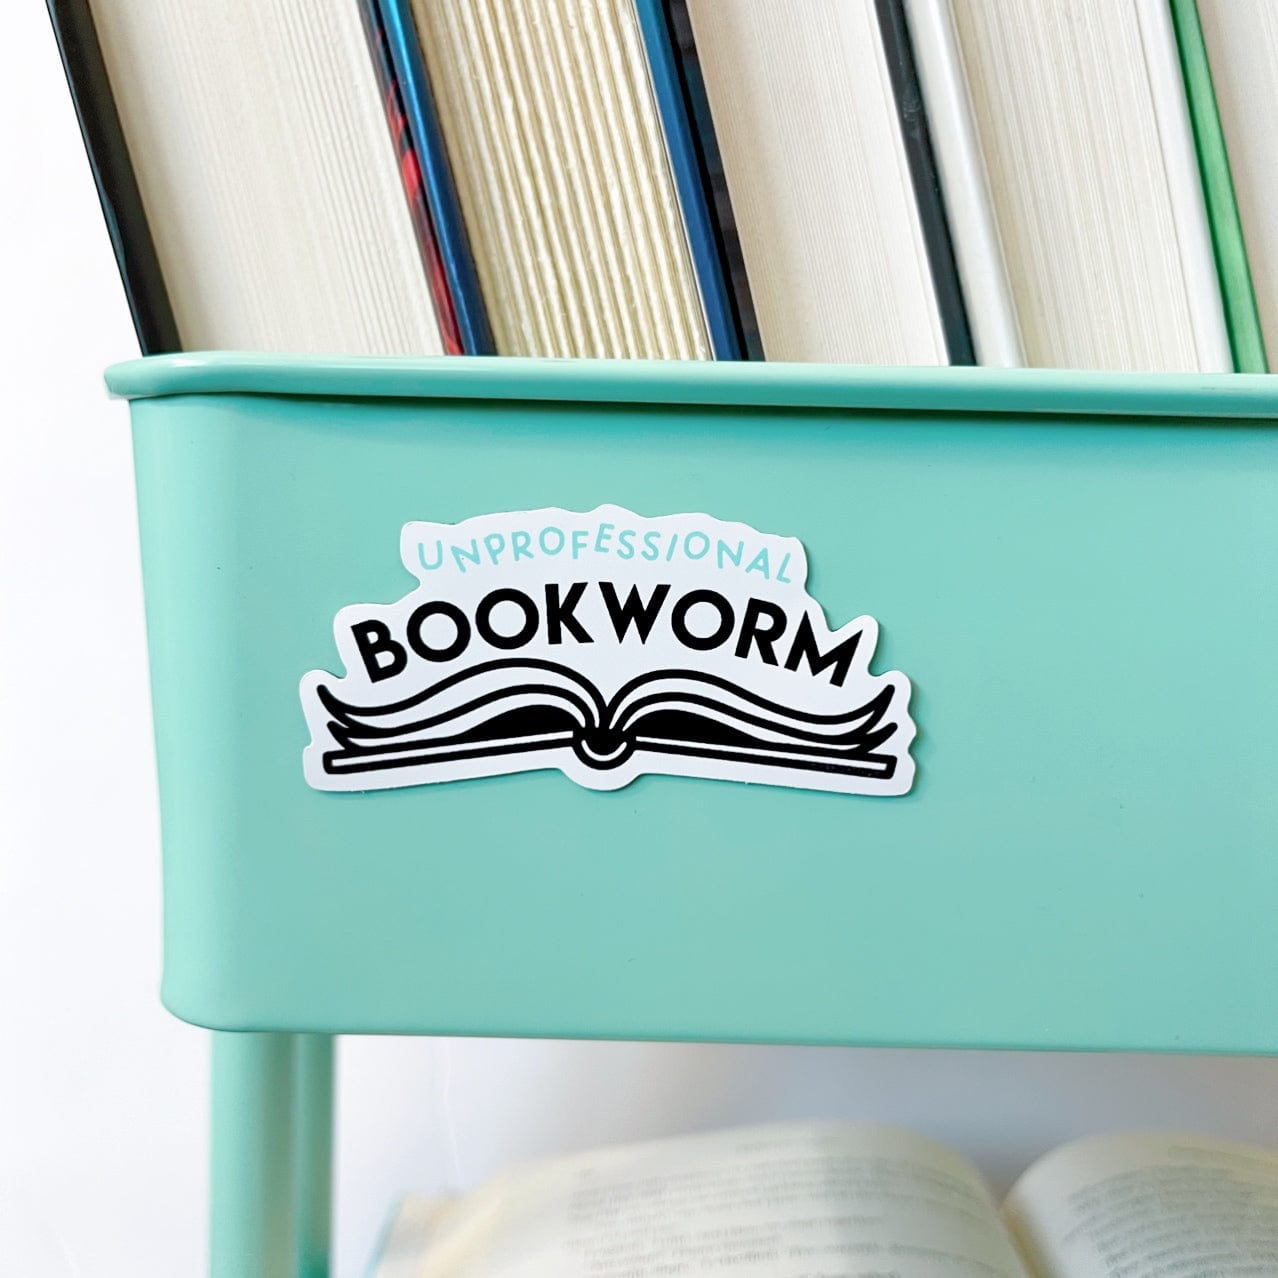 Unprofessional Bookworm Book Cart Magnet